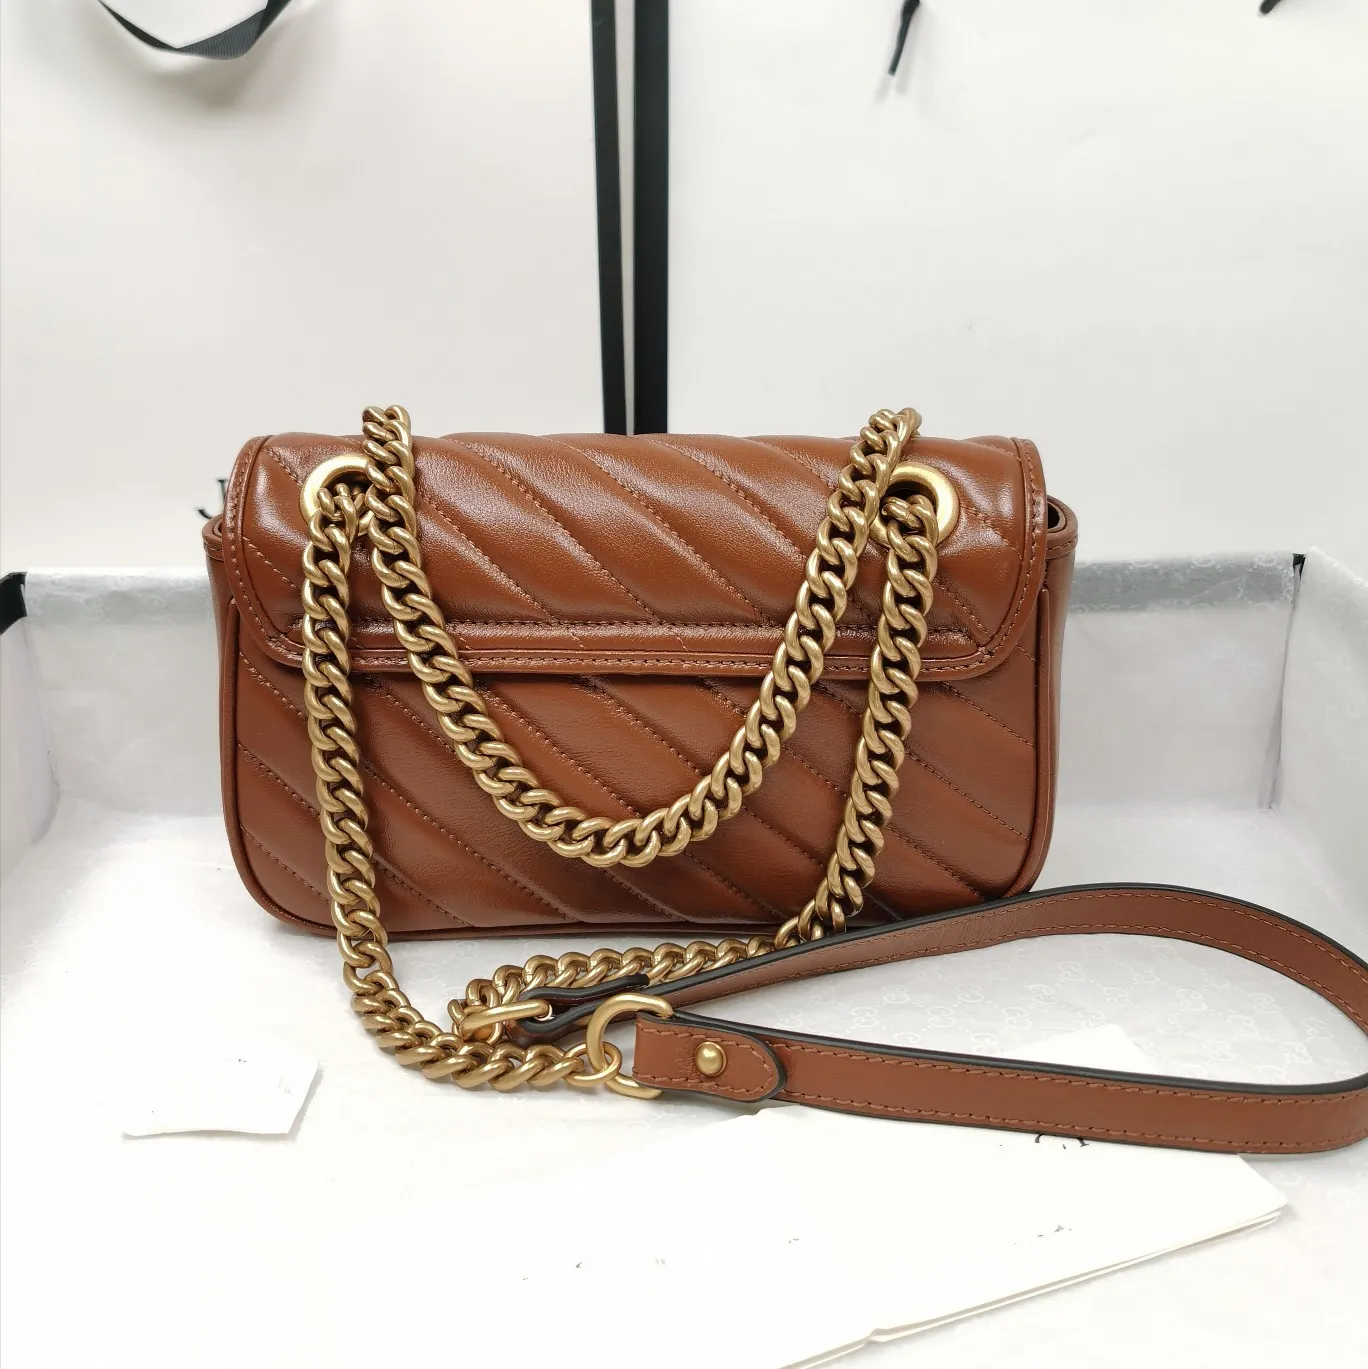 2021Top Quality Fashion Shoulder Bags Women Chain Crossbody Handbags Lady Leather Handbag Purses Wallet Purse Female Messenger Bag Many Colors Chooes